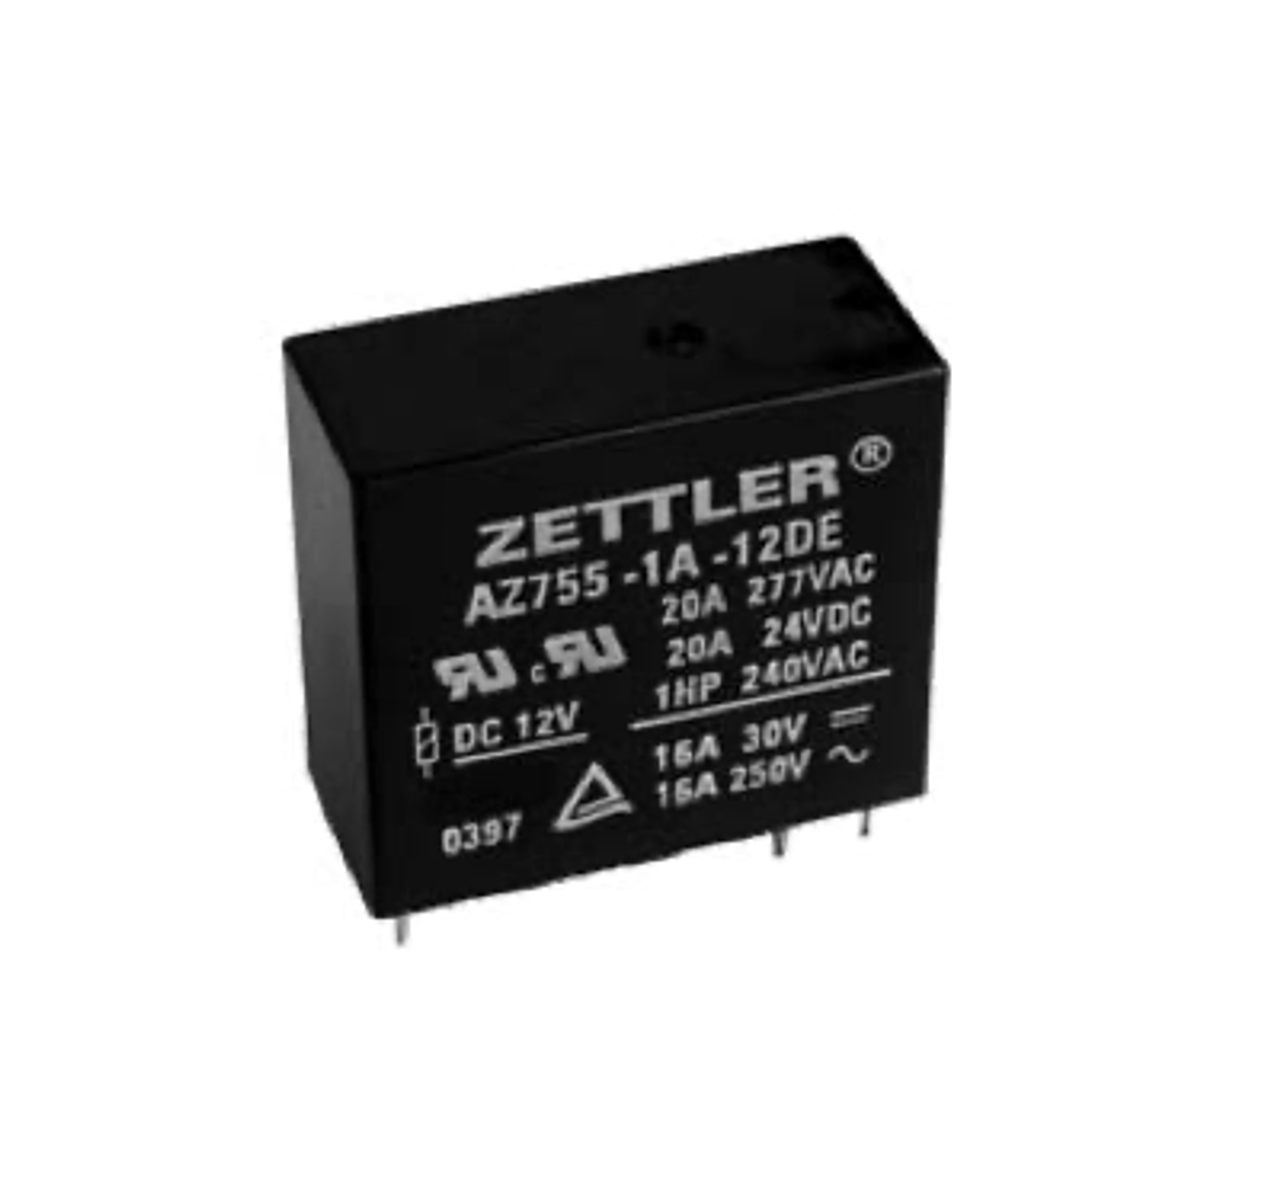 American Zettler AZ755-1A-6DE Power Relay